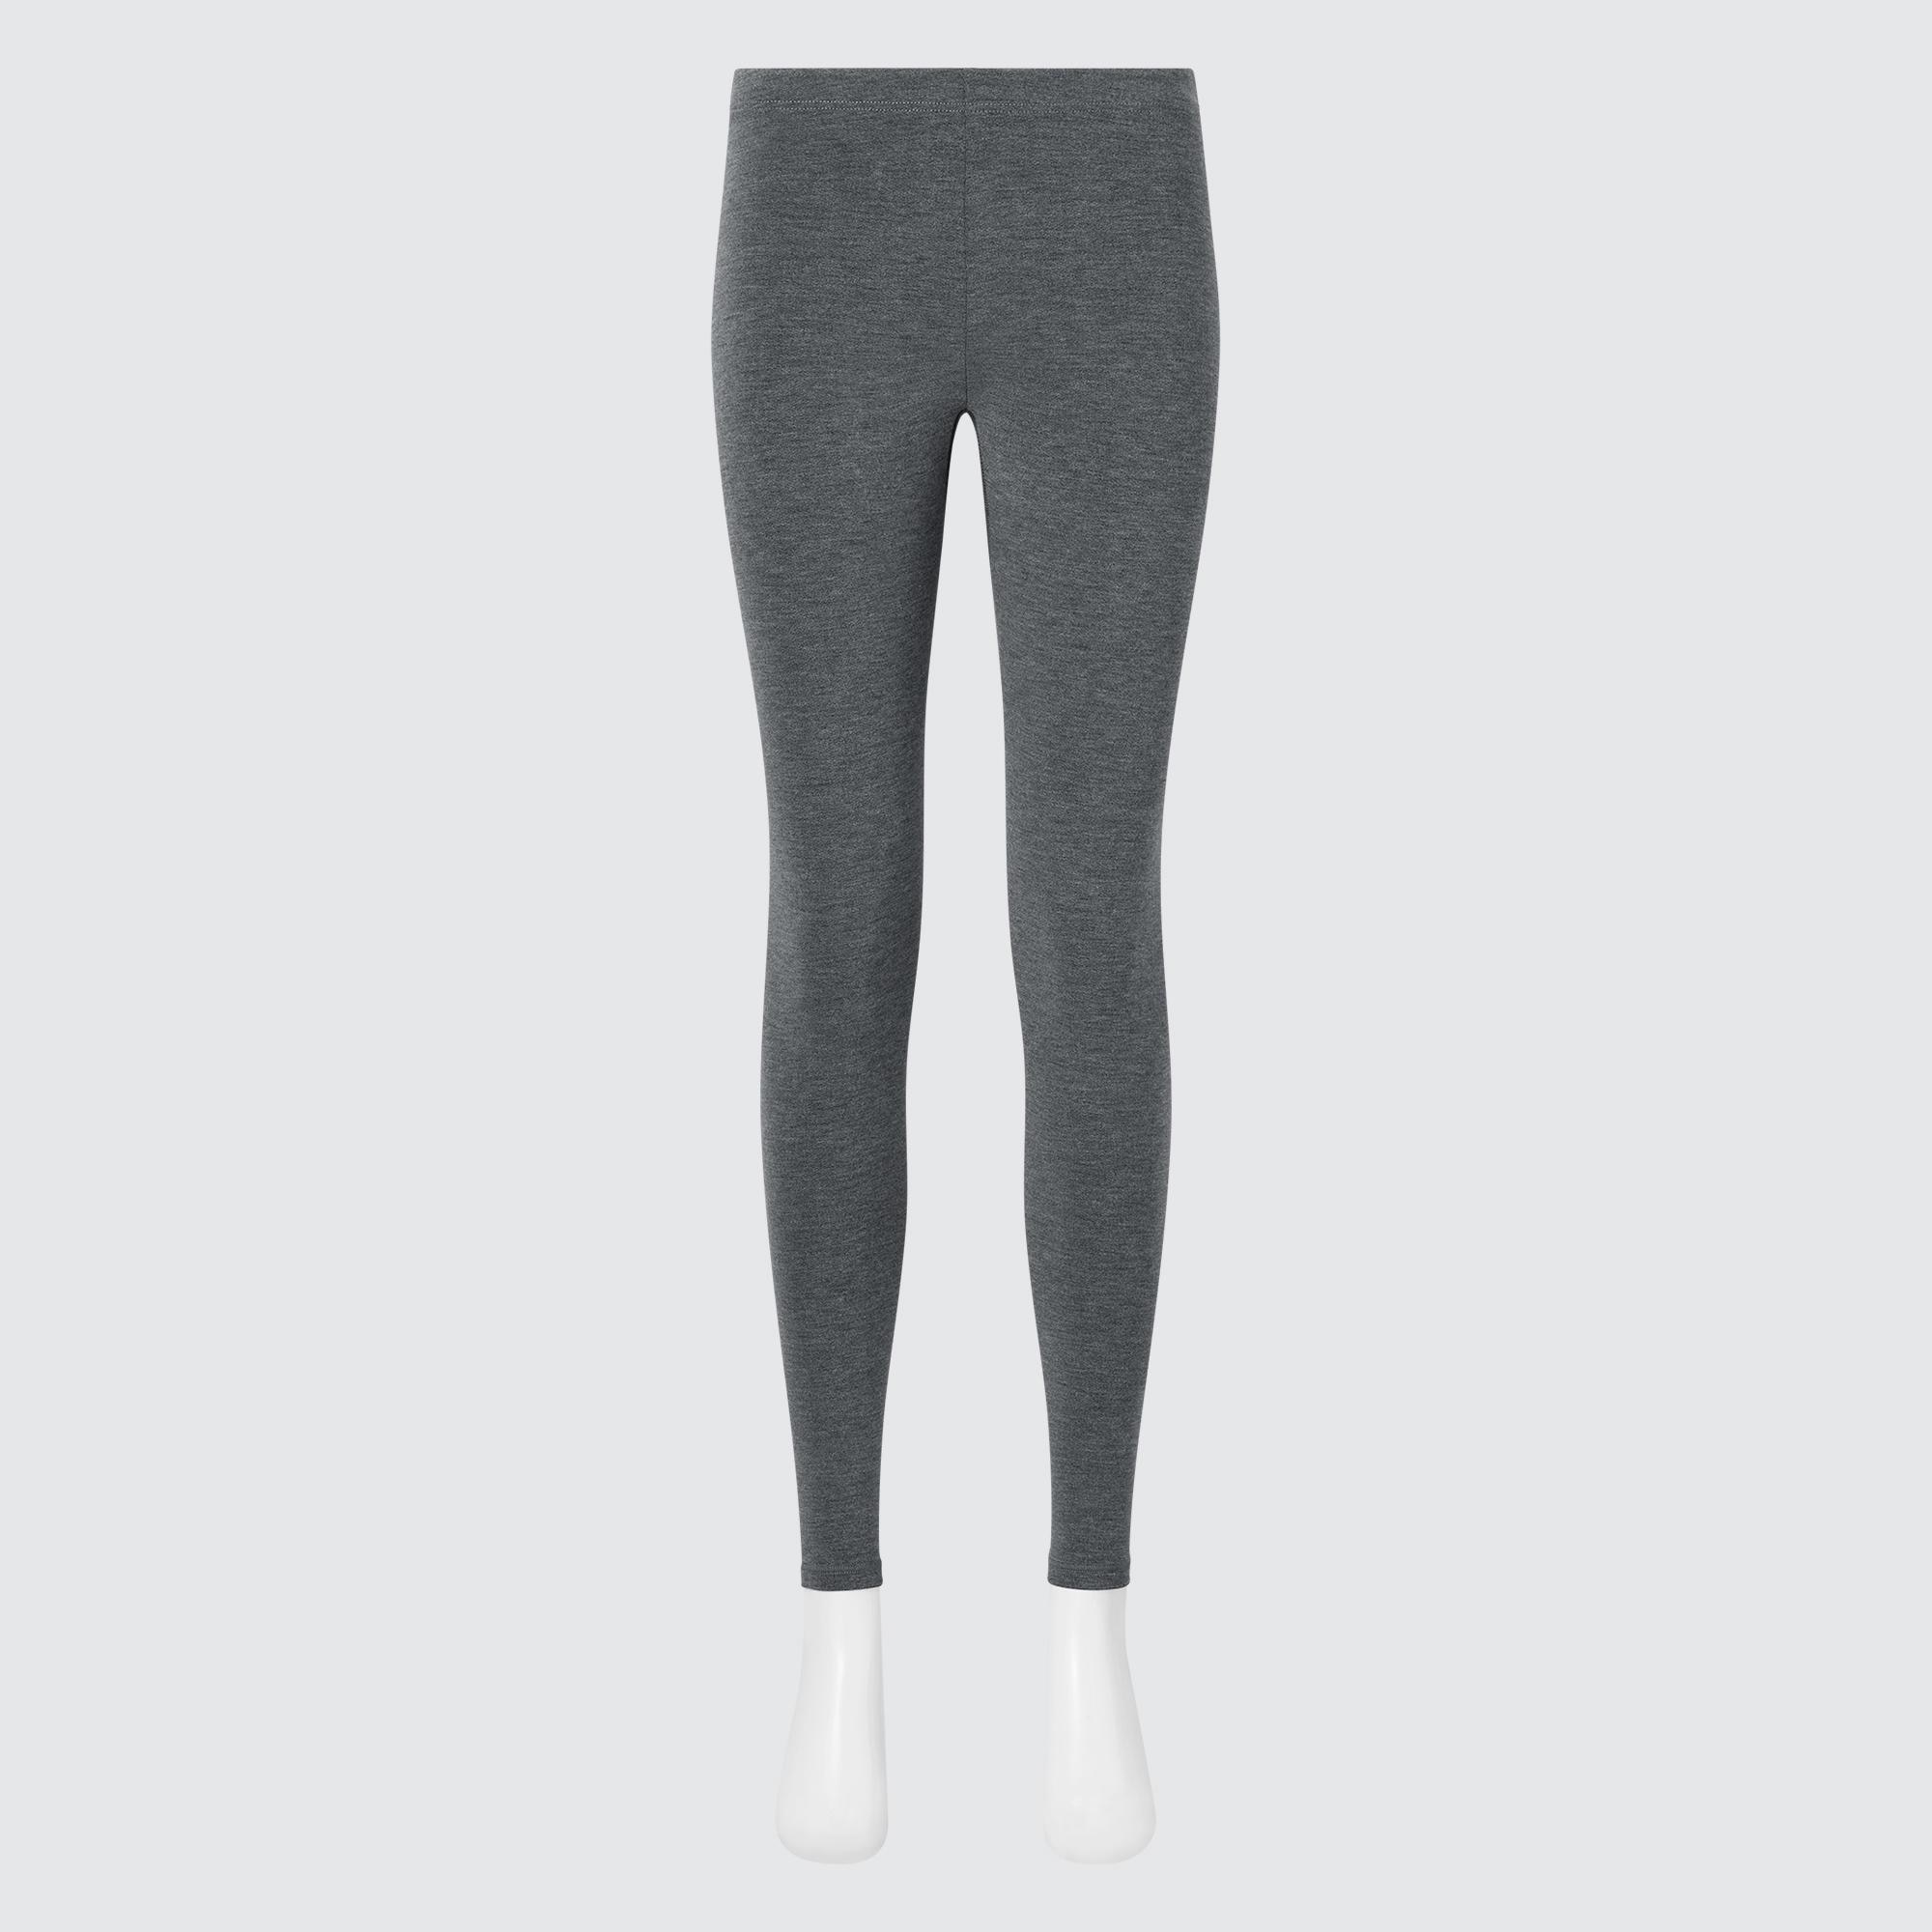 Uniqlo - Heattech Ultra Stretch High Rise Leggings Trousers - Gray - L, £34.90